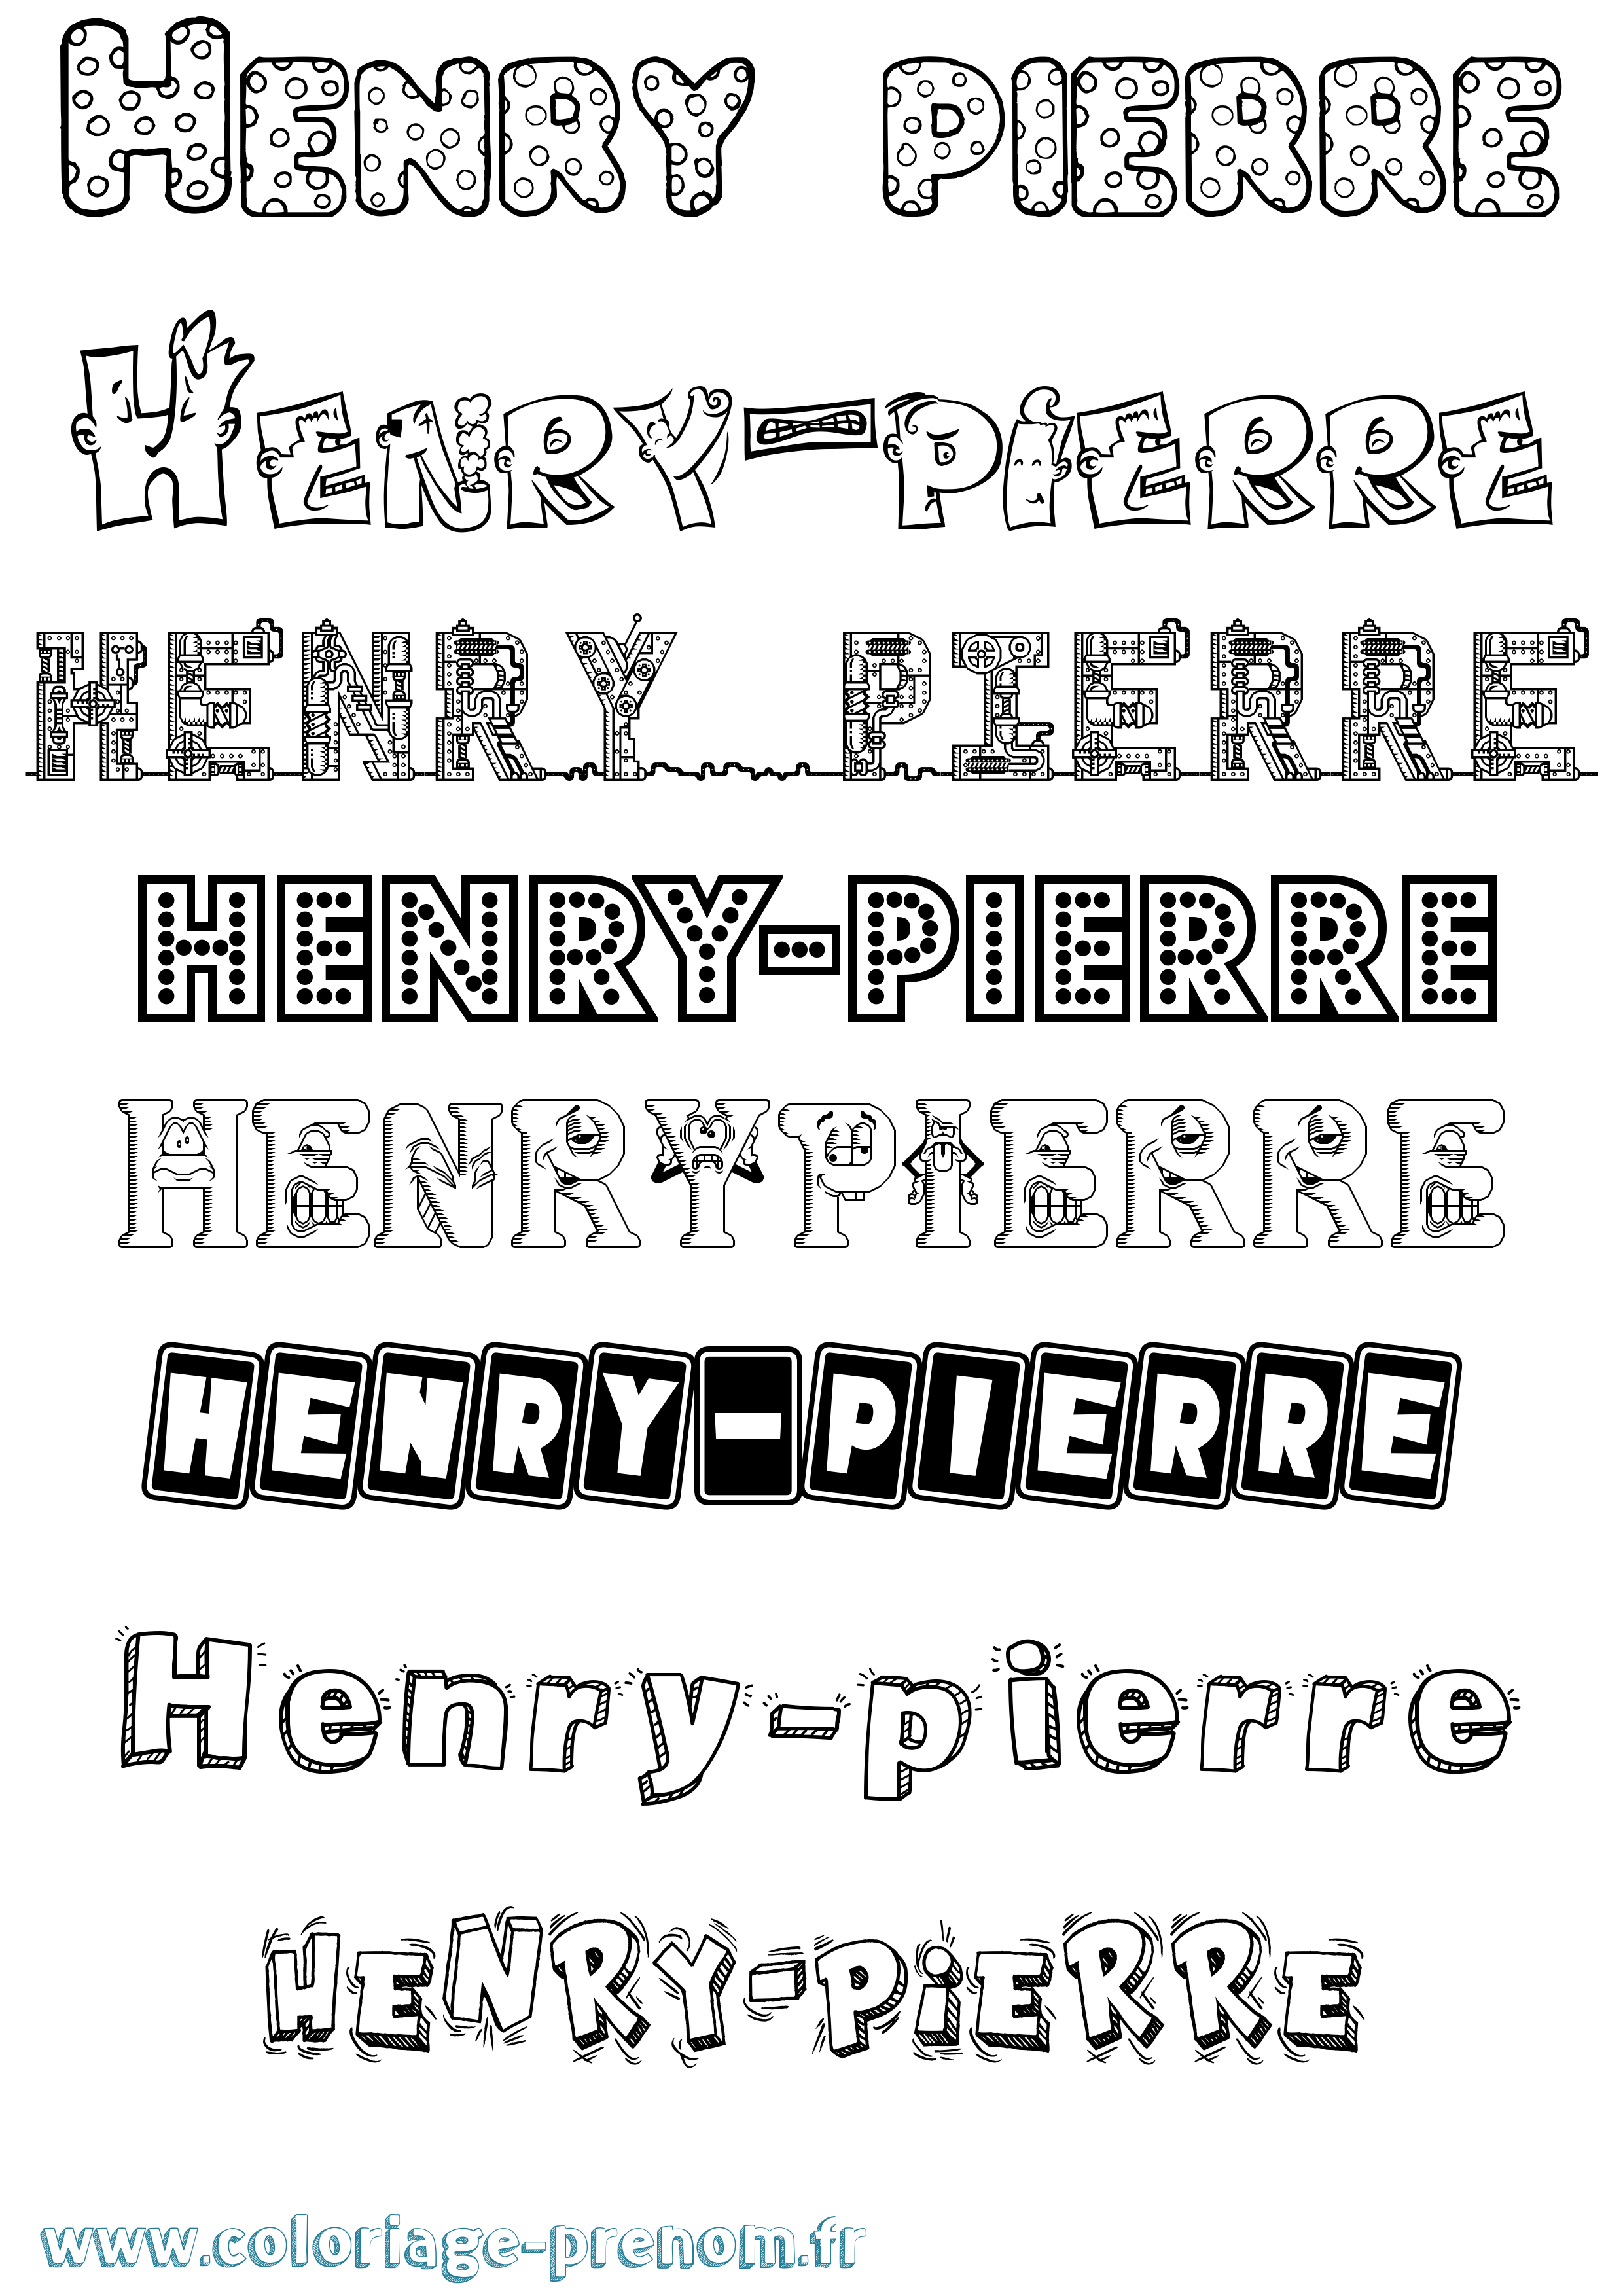 Coloriage prénom Henry-Pierre Fun